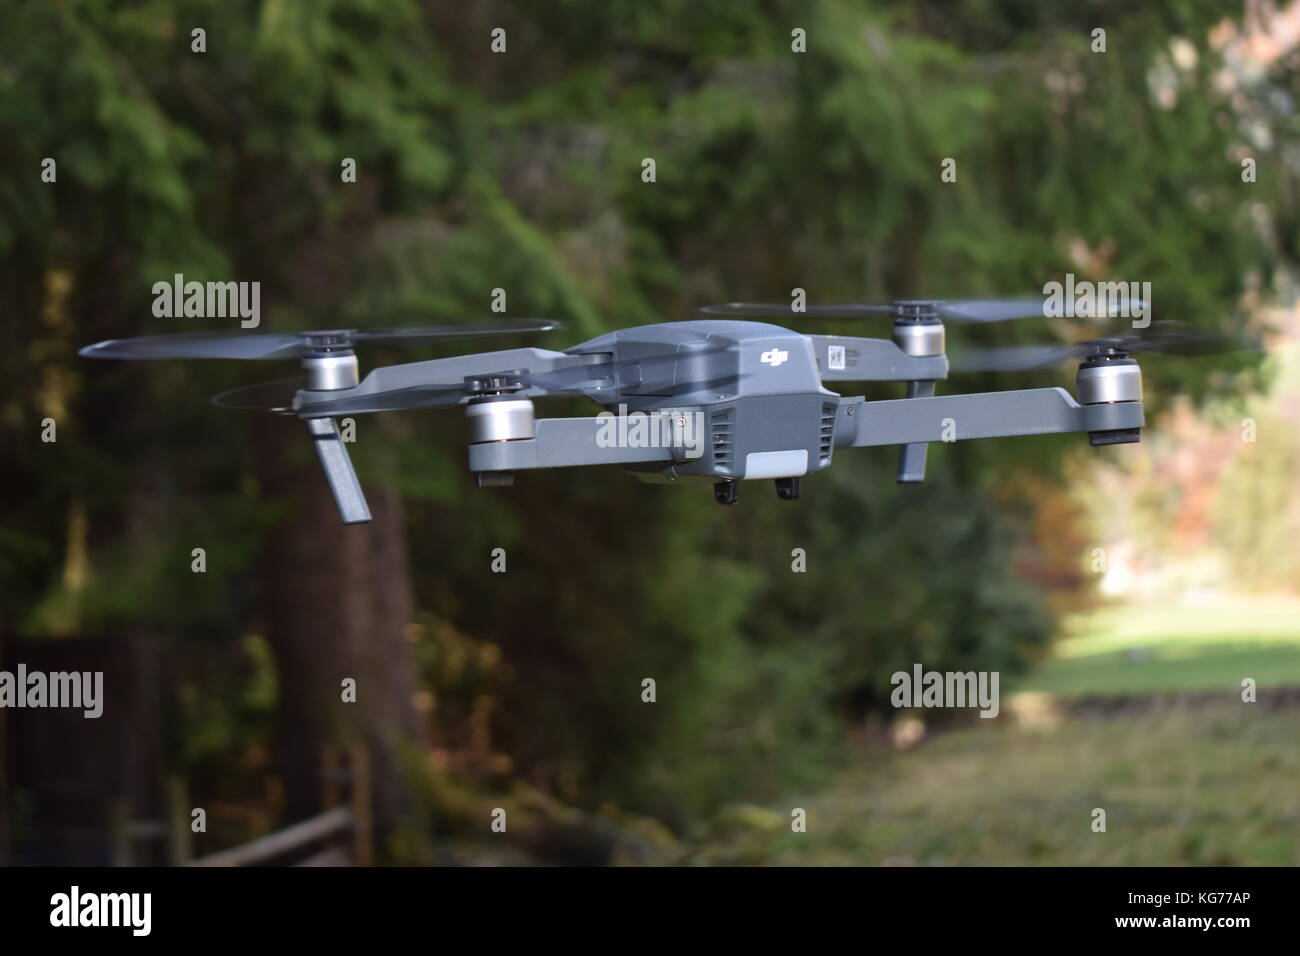 Dji mavic drone en vuelo Foto de stock